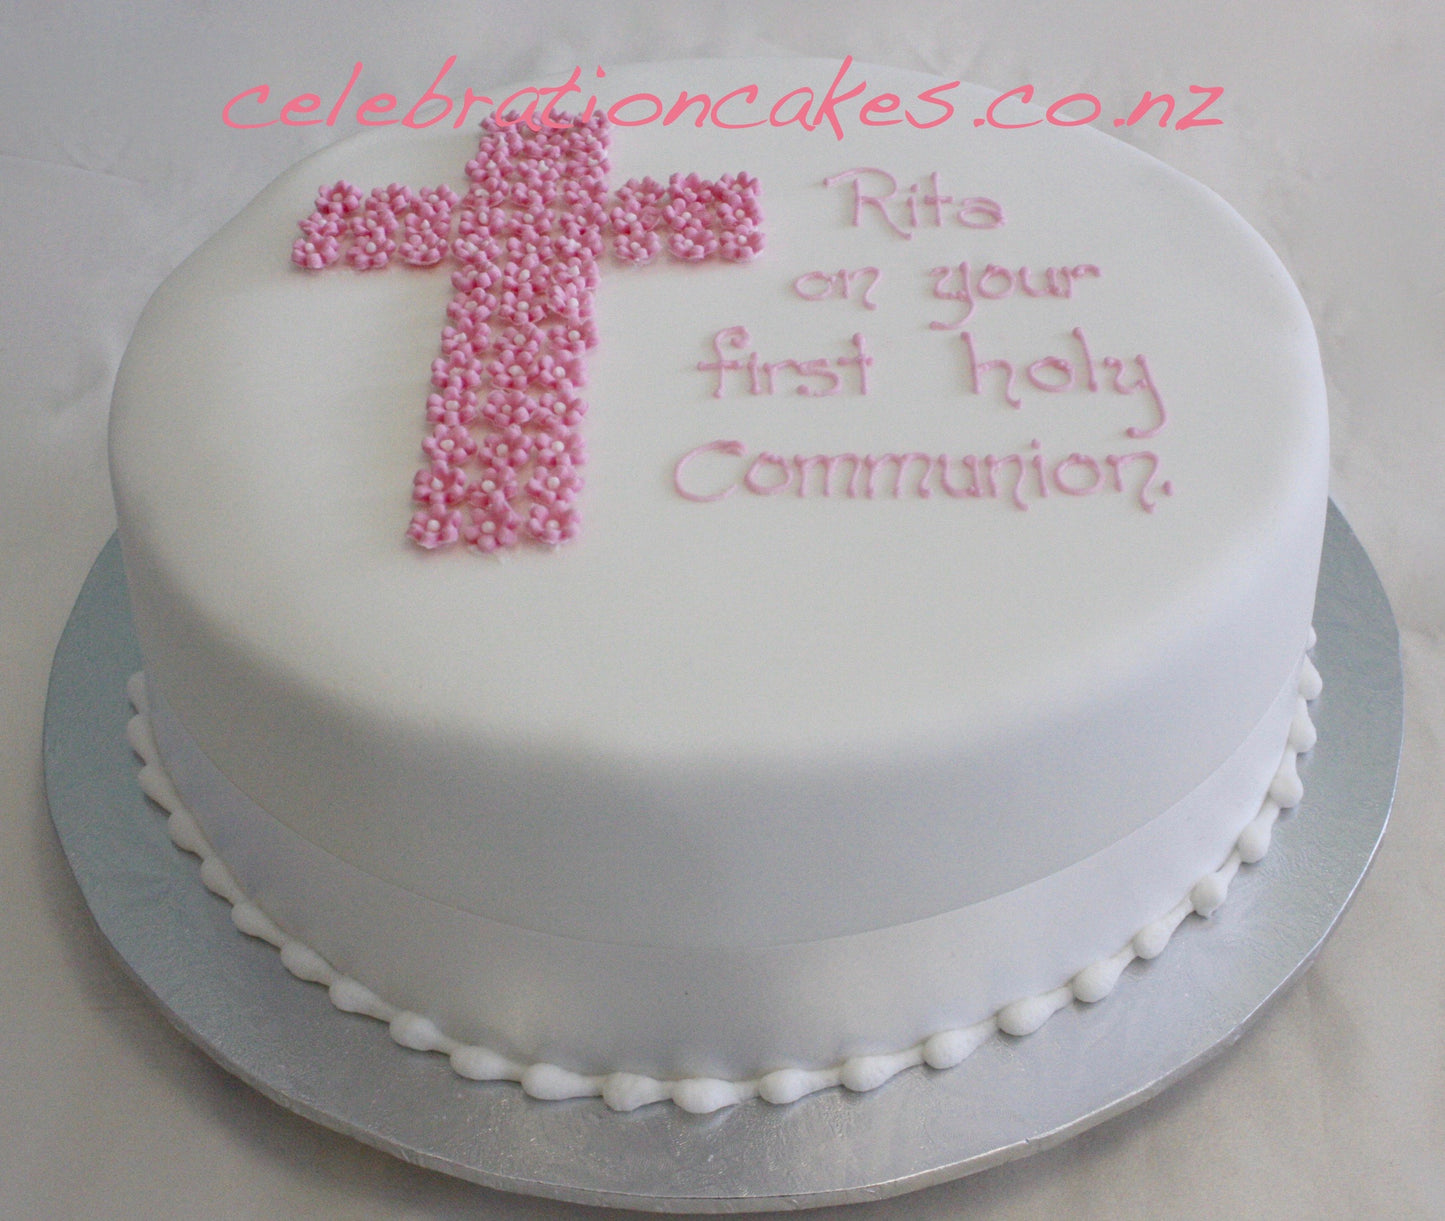 Rita Birthday Cake - CakeCentral.com